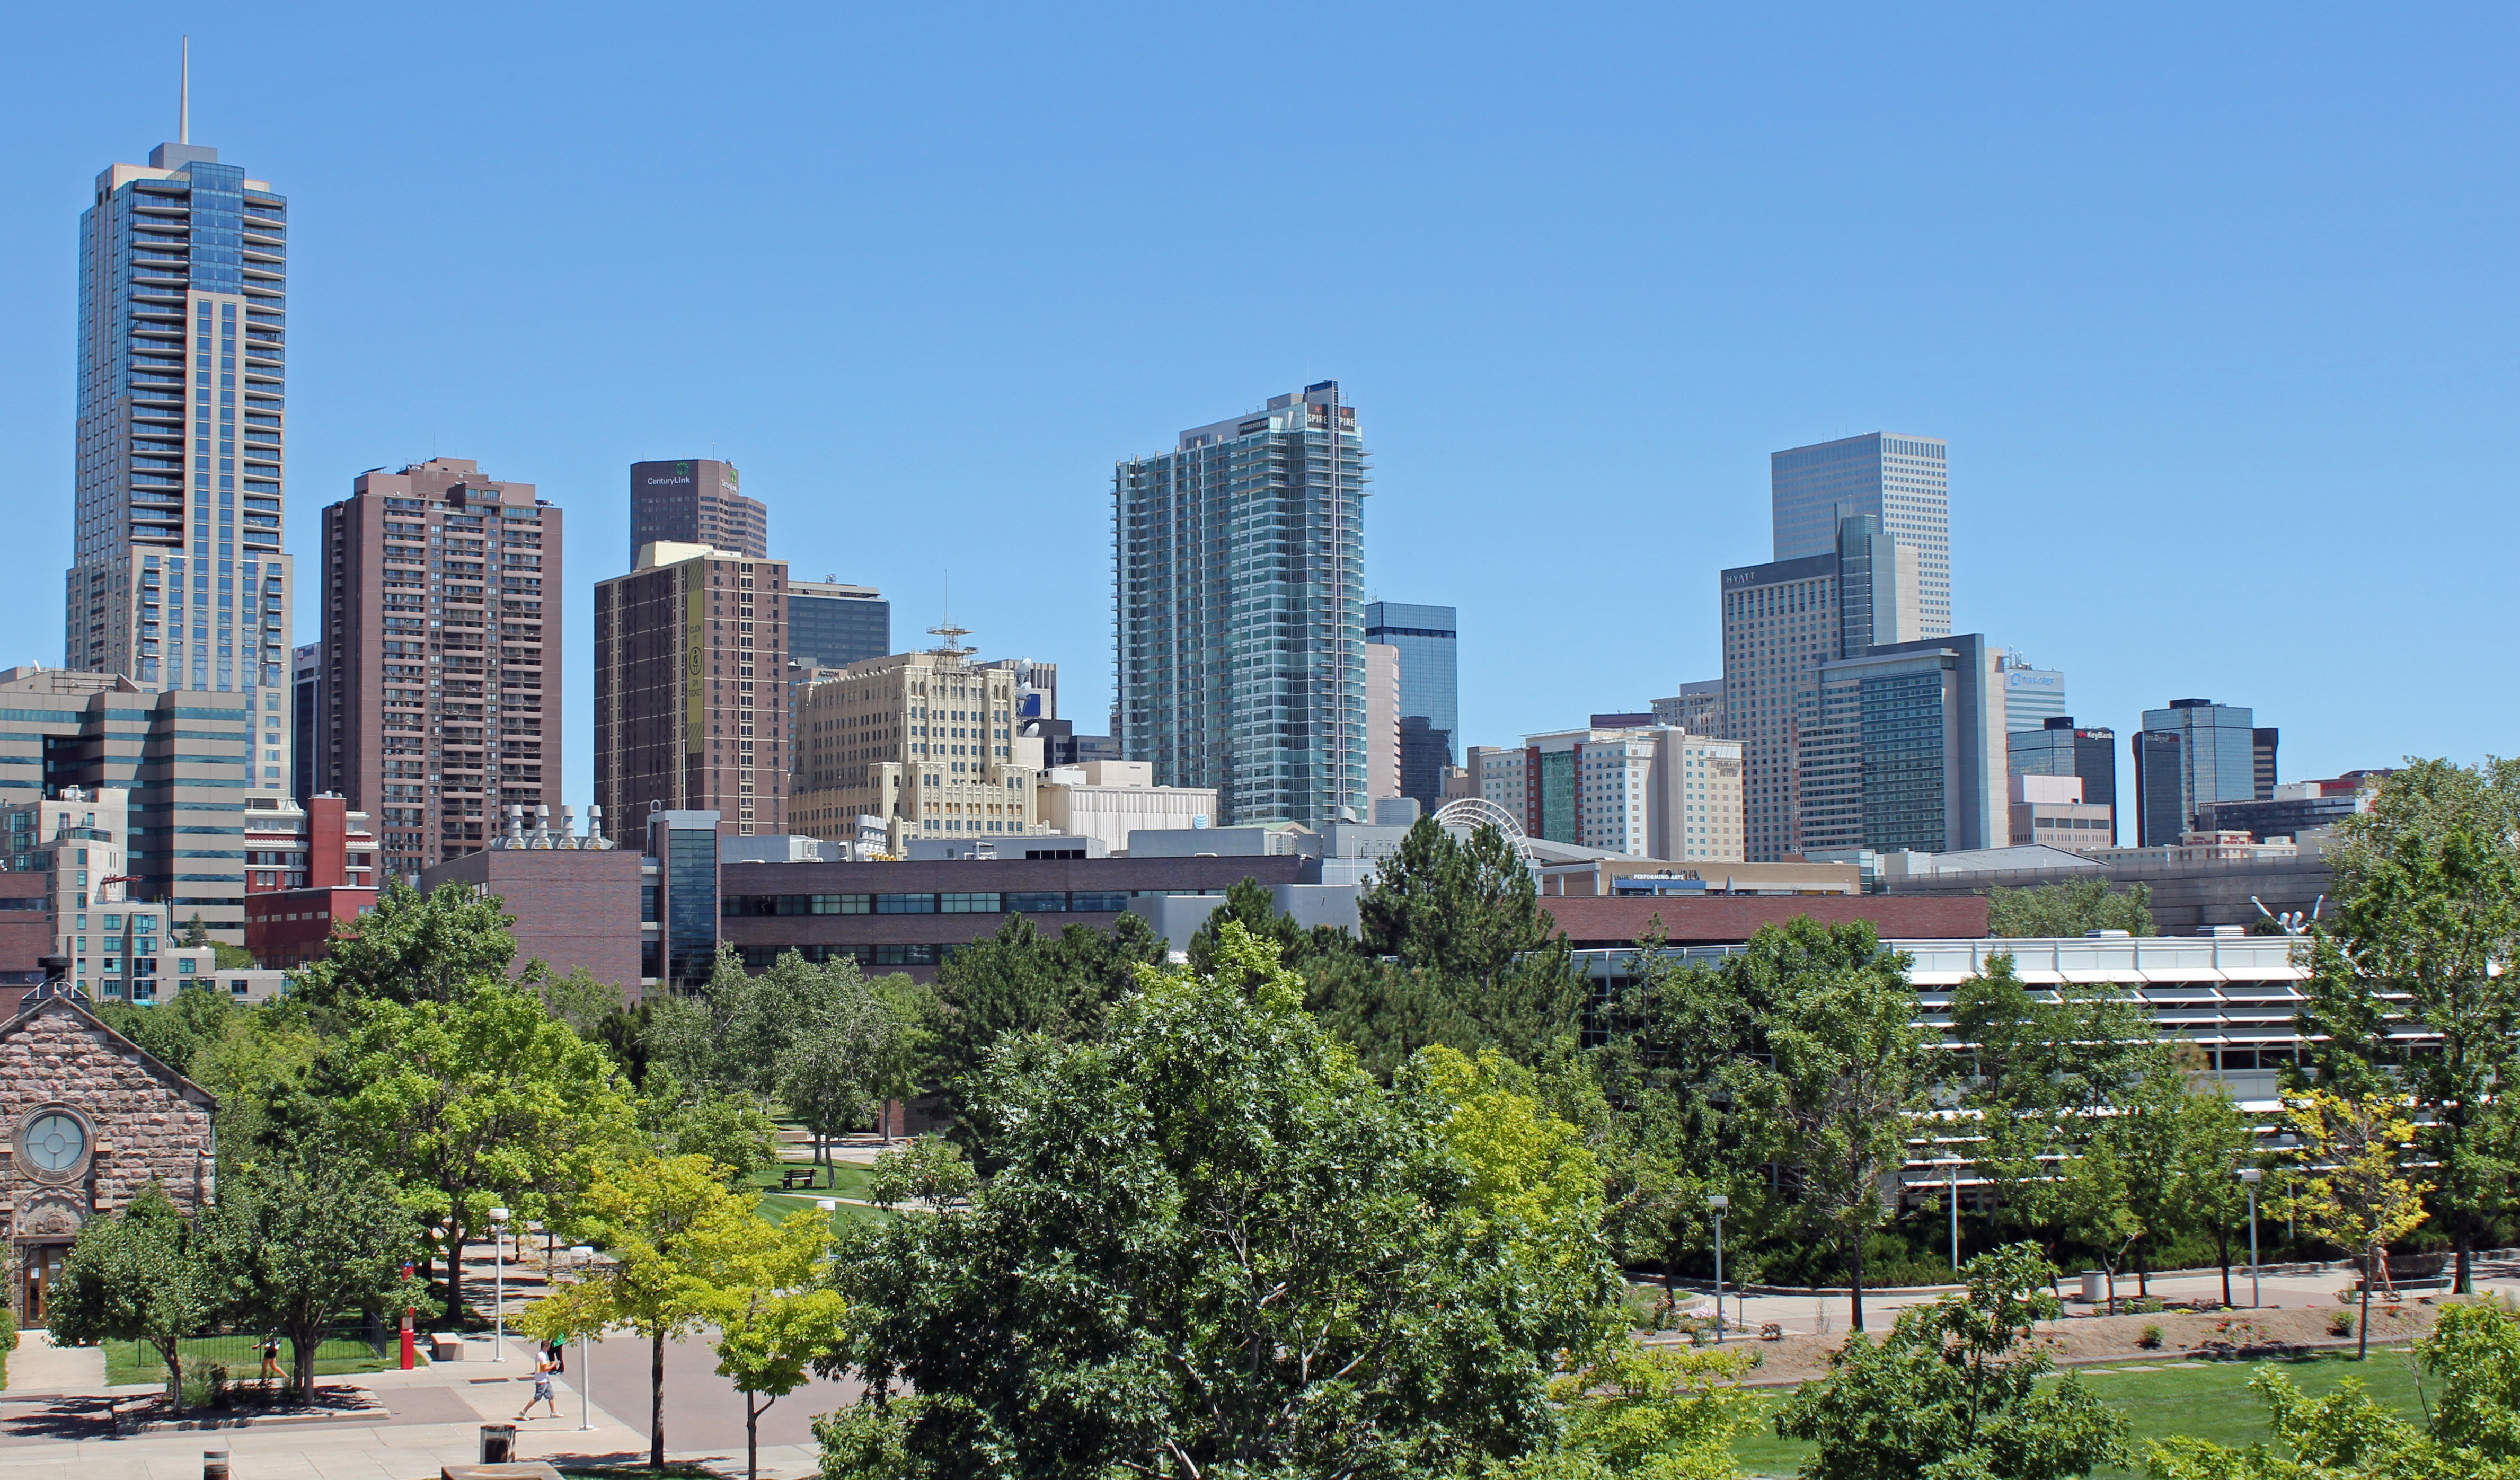 Daytime Skyline of Downtown Denver, Colorado image - Free stock photo